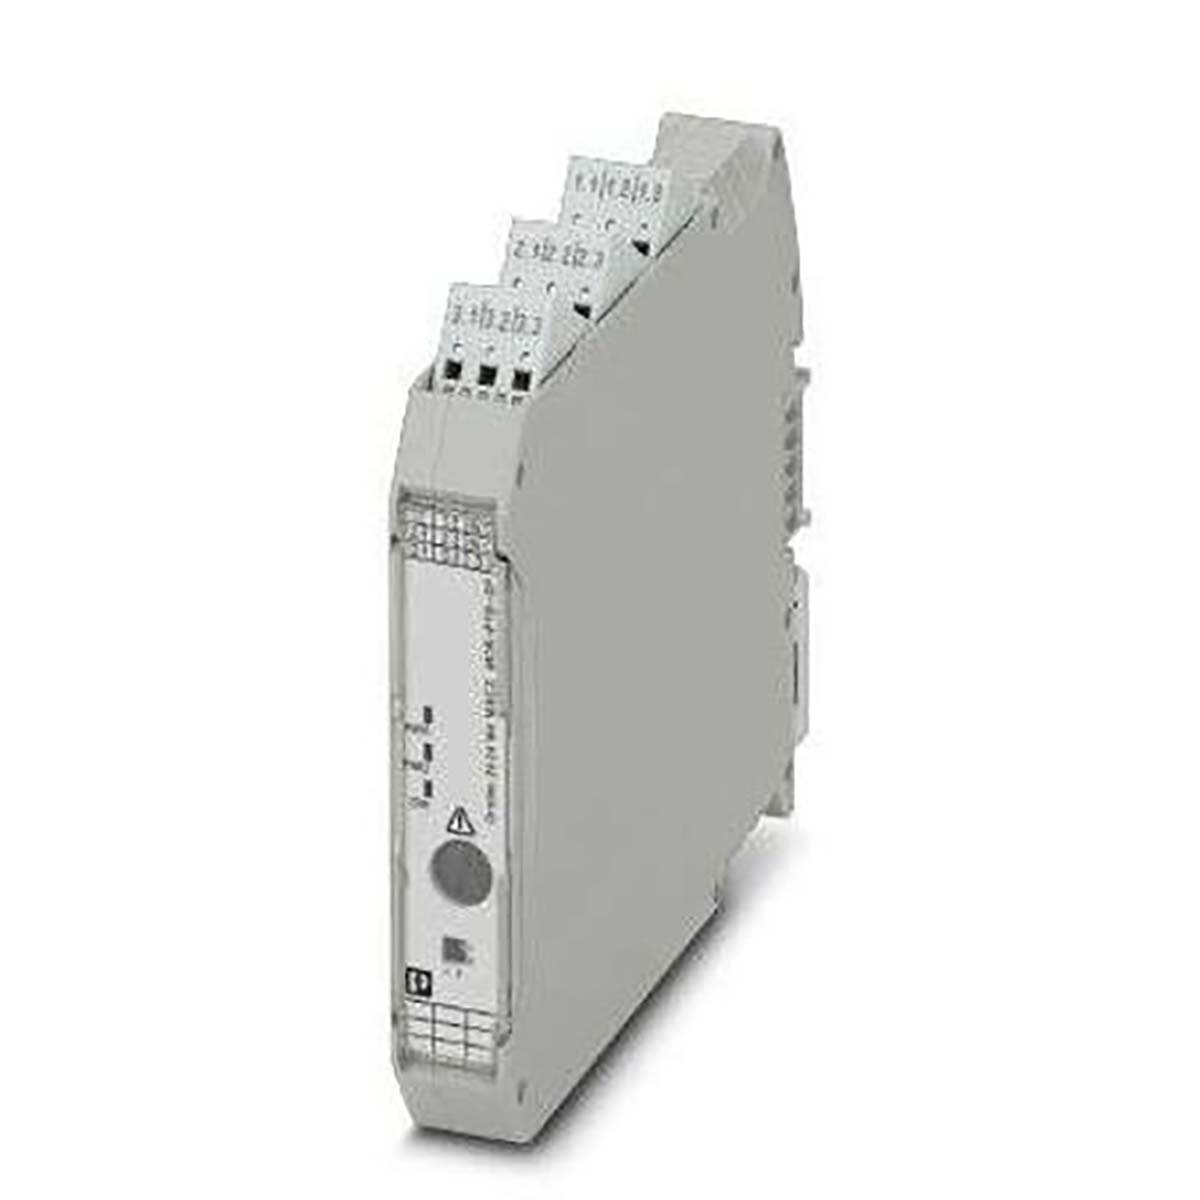 Phoenix Contact MACX MCR-PTB-SP Series Signal Conditioner, Voltage Input, Relay Output, ATEX